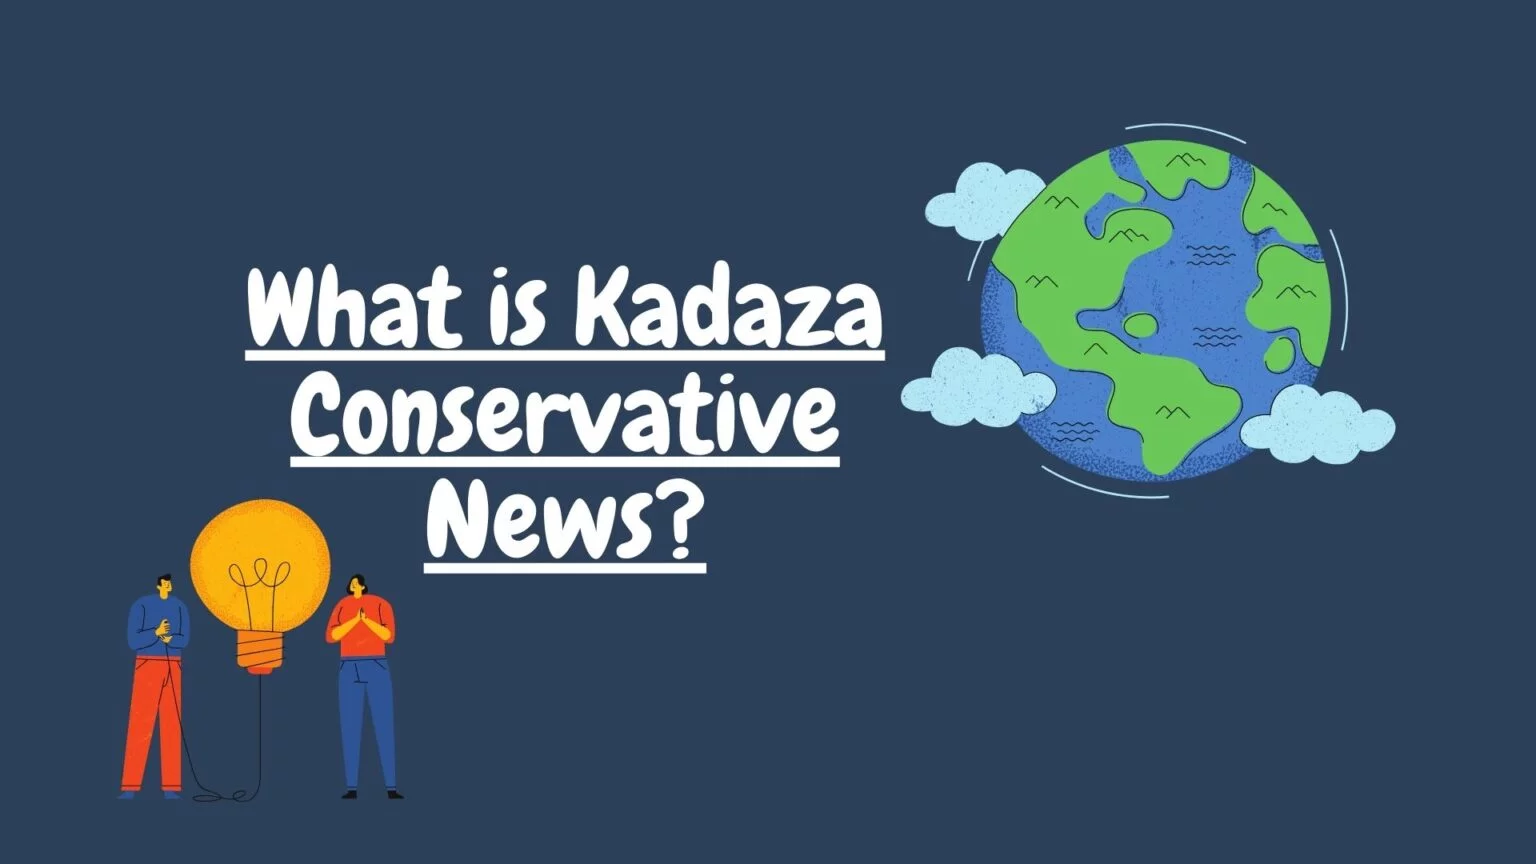 Kadaza Conservative